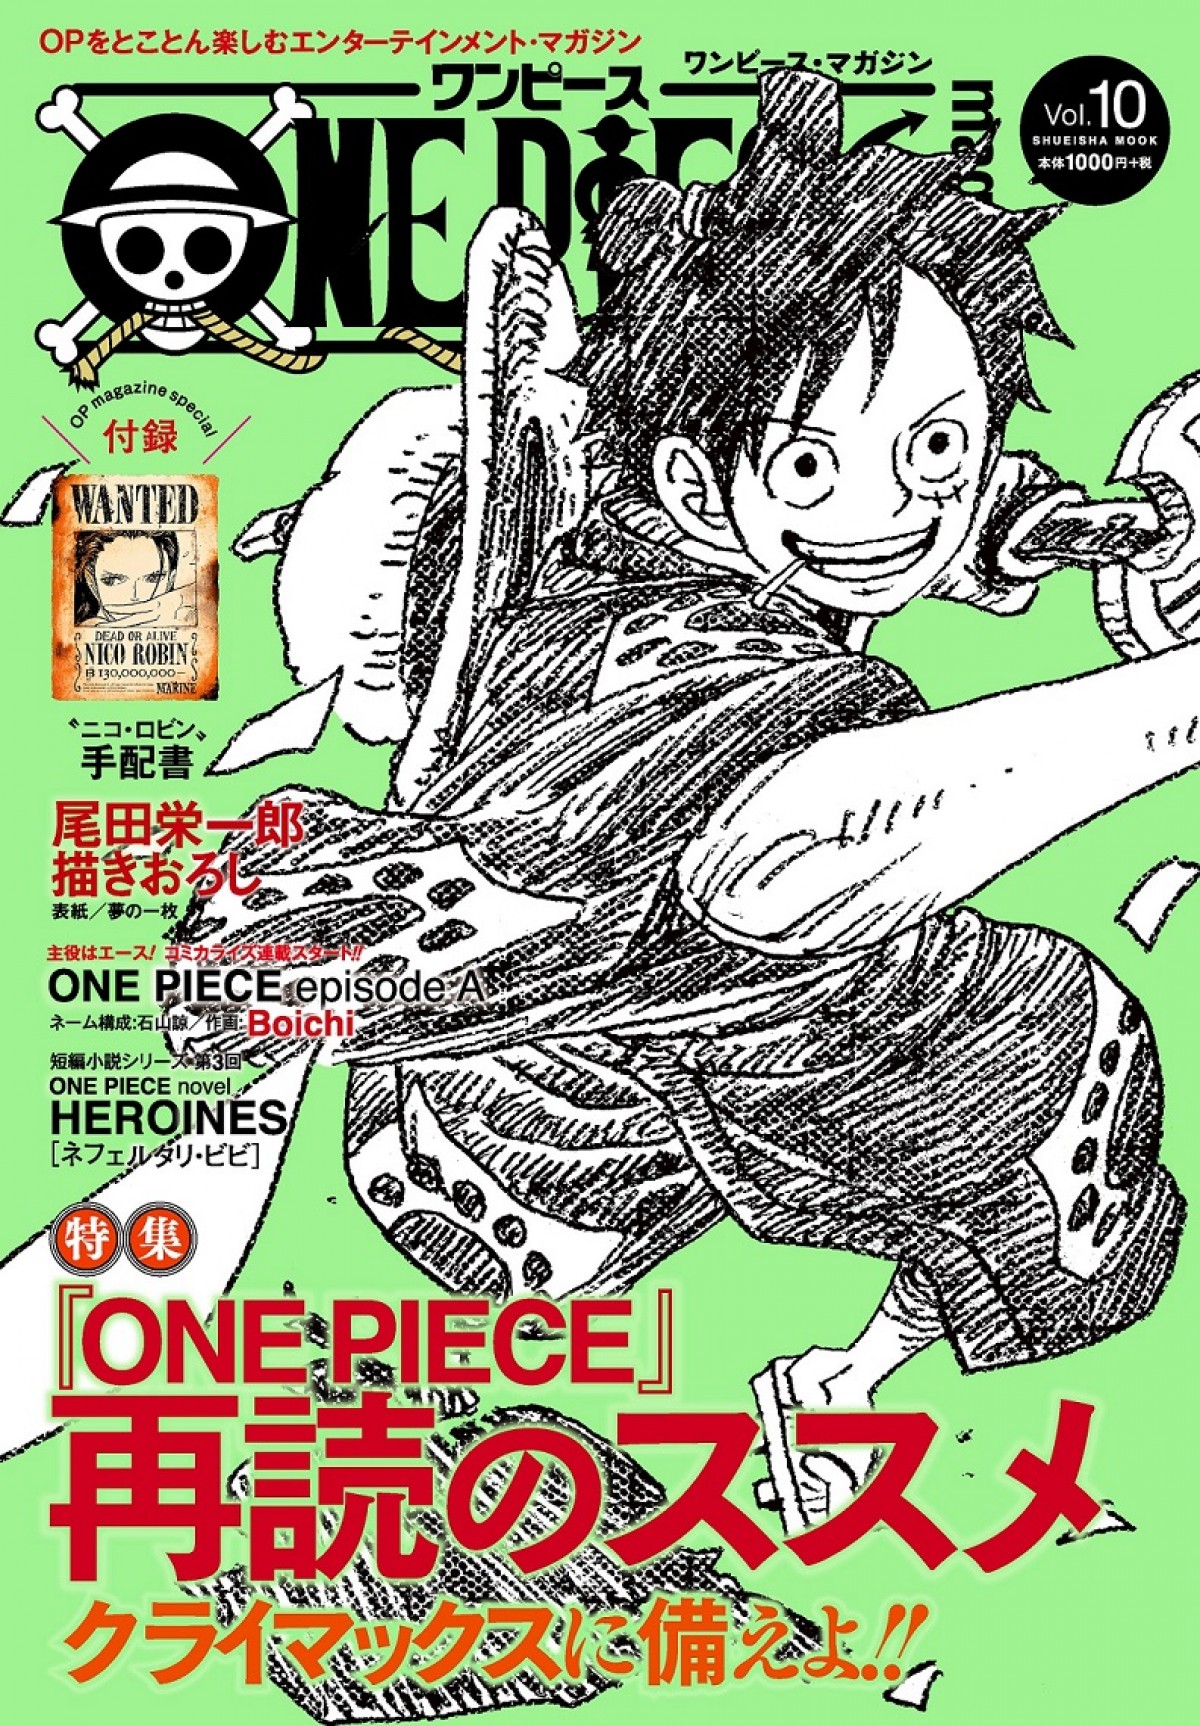 「ONE PIECE magazine Vol.10」9.16発売　Boichi作画、「エース」主人公の漫画スタート